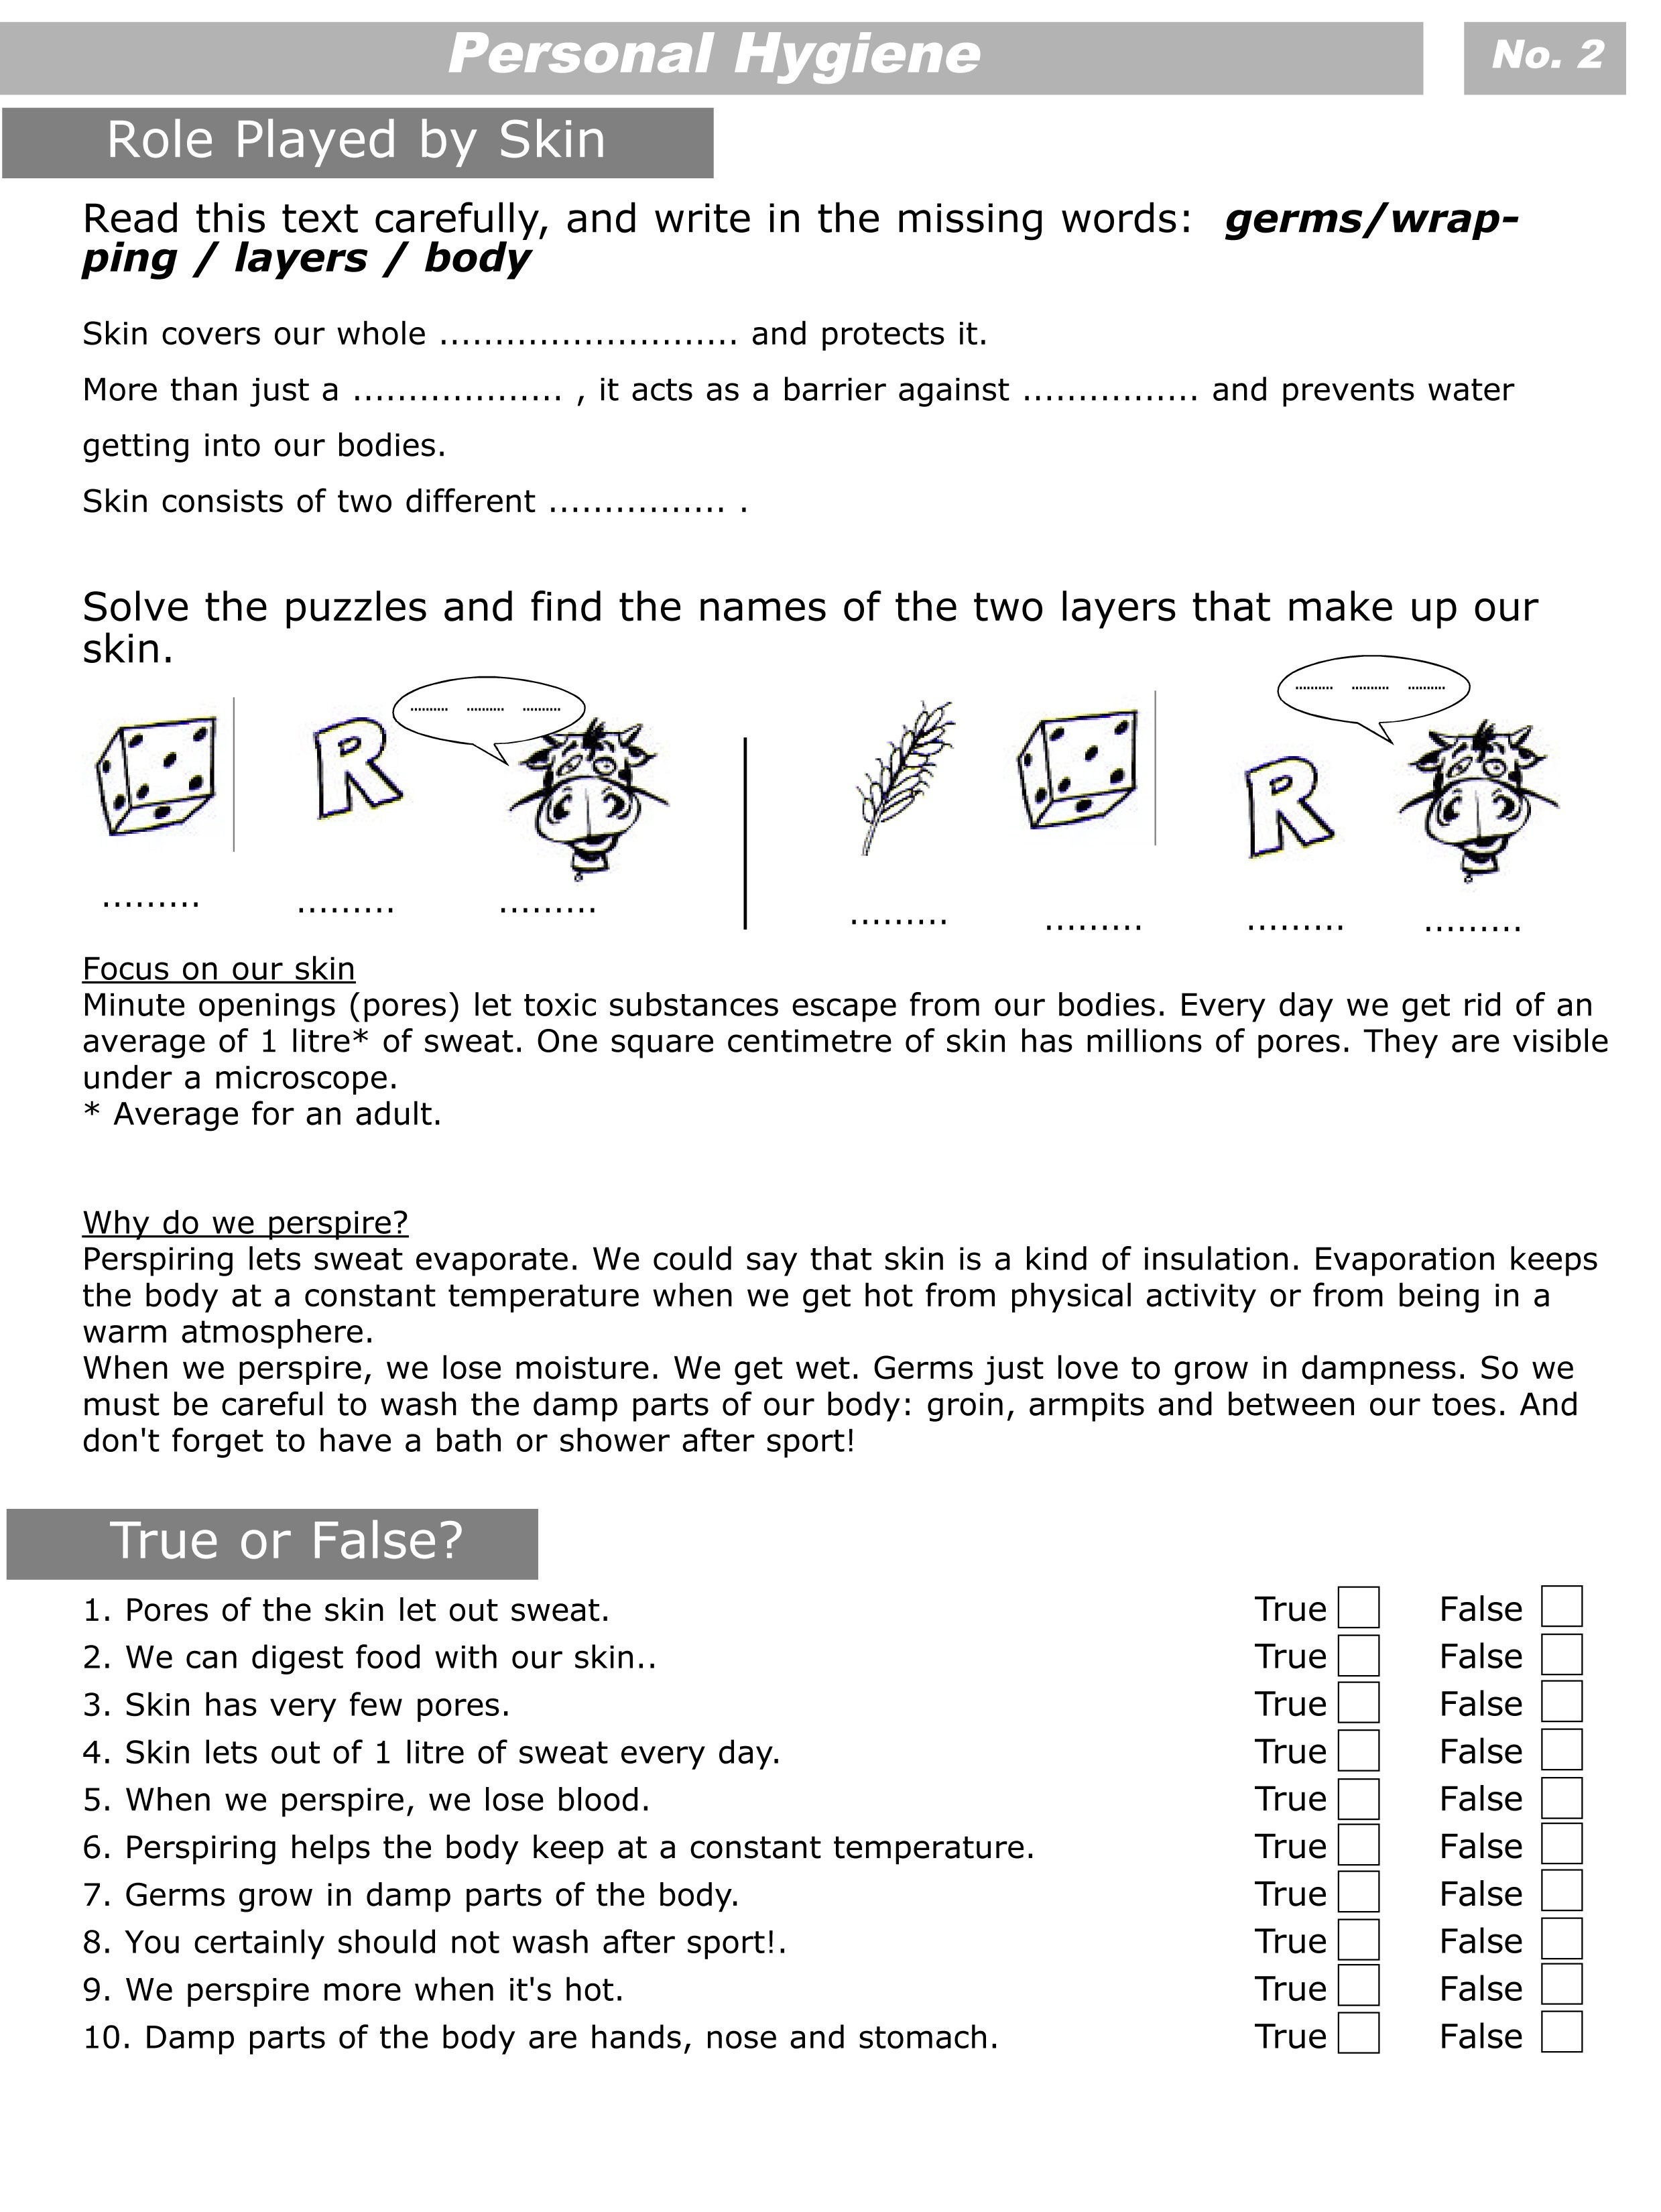 Personal Hygiene Worksheets For Kids Level 2 2  Personal Hygiene For Personal Hygiene Worksheets Middle School